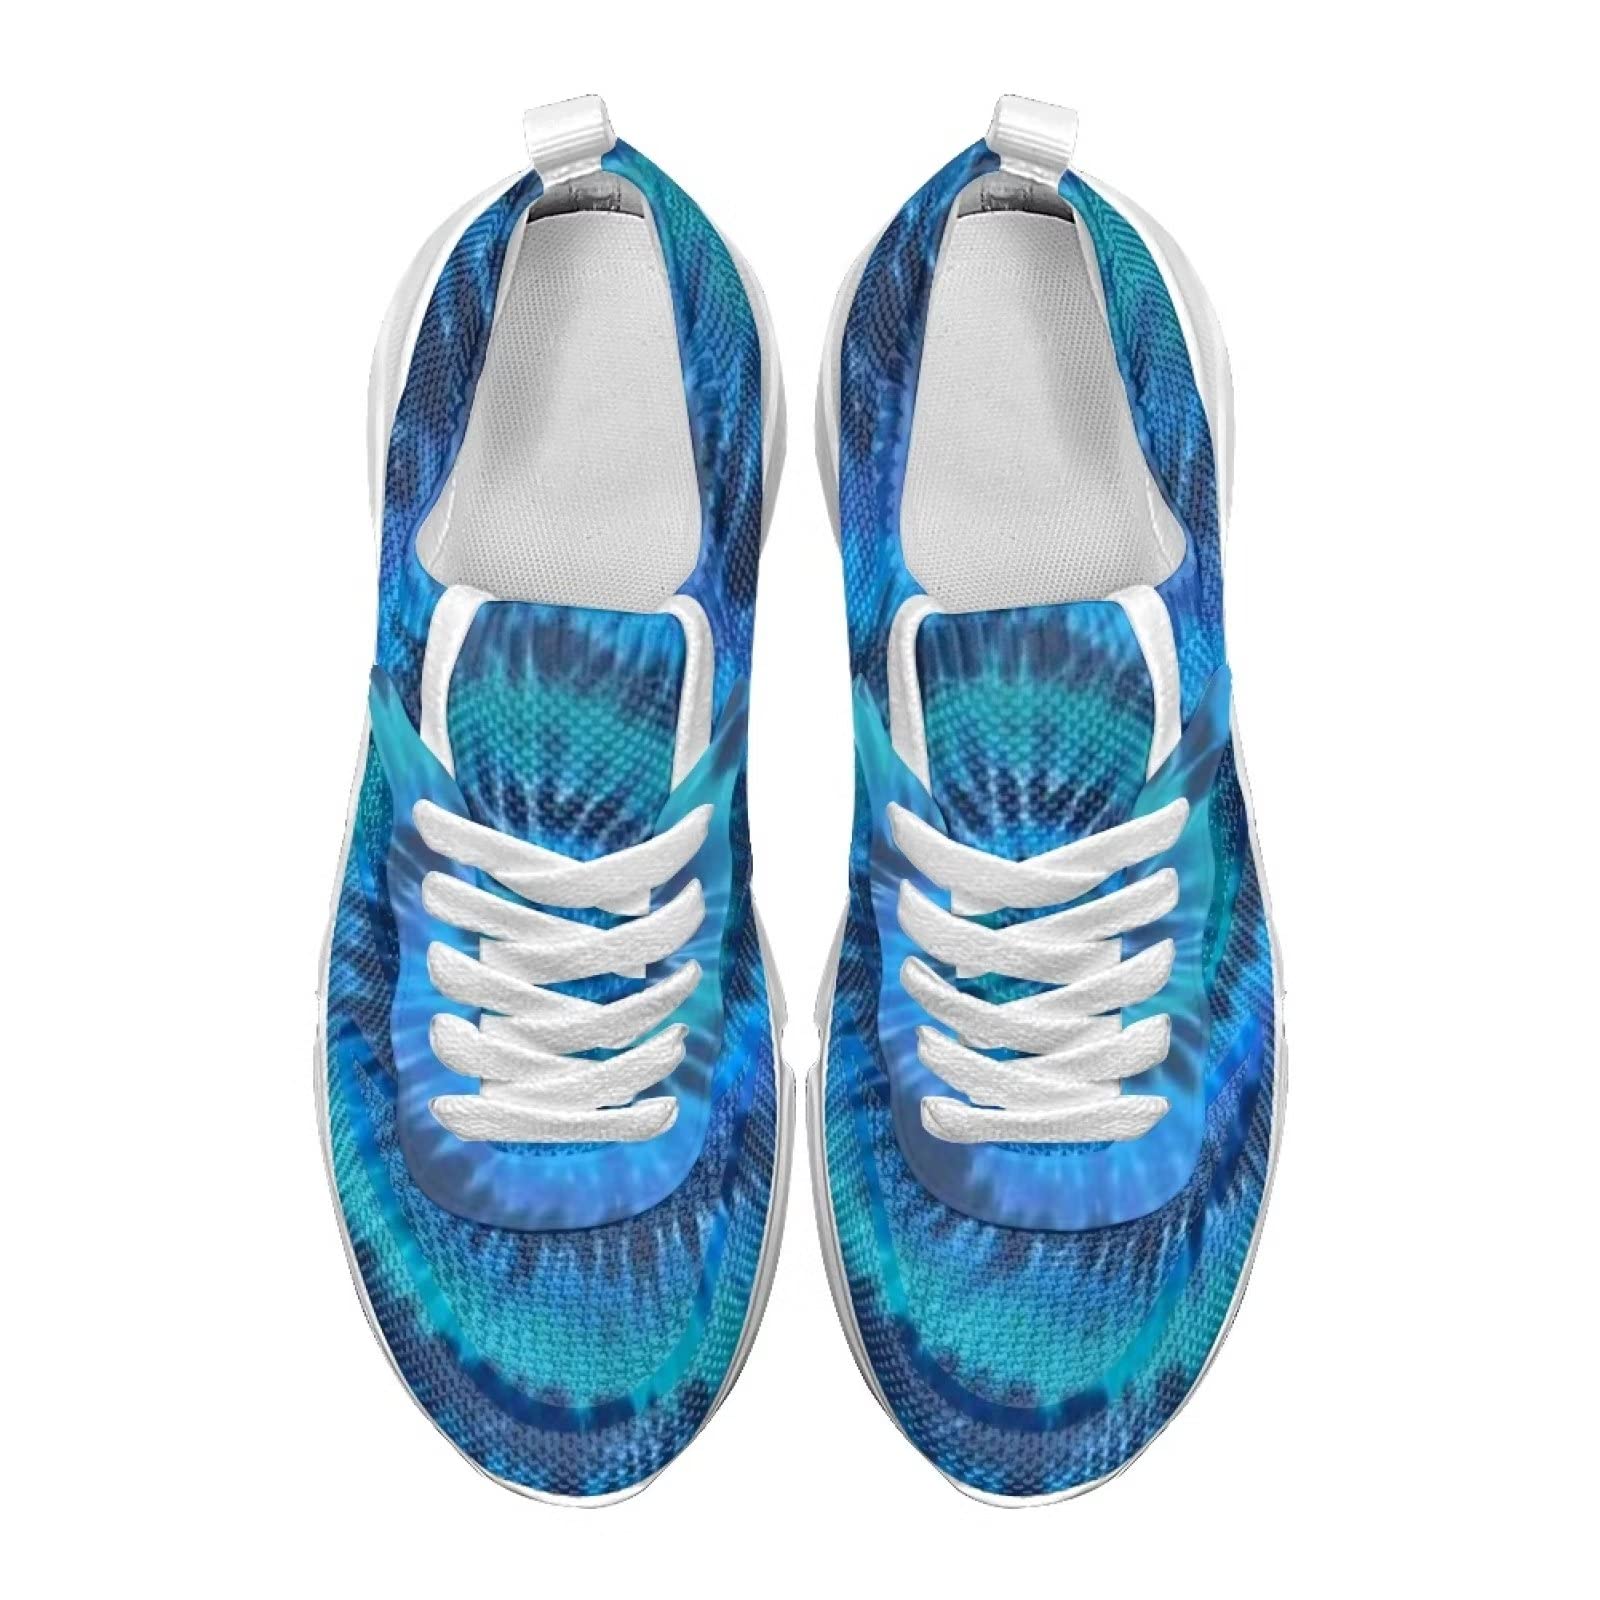 KUIFORTI Tie Dye Shoes for Women's Walking Shoes Casual Sport Gym Sneakers Lightweight Tennis Running Shoes Slip on Work Sneakers Blue,Size 41 EU